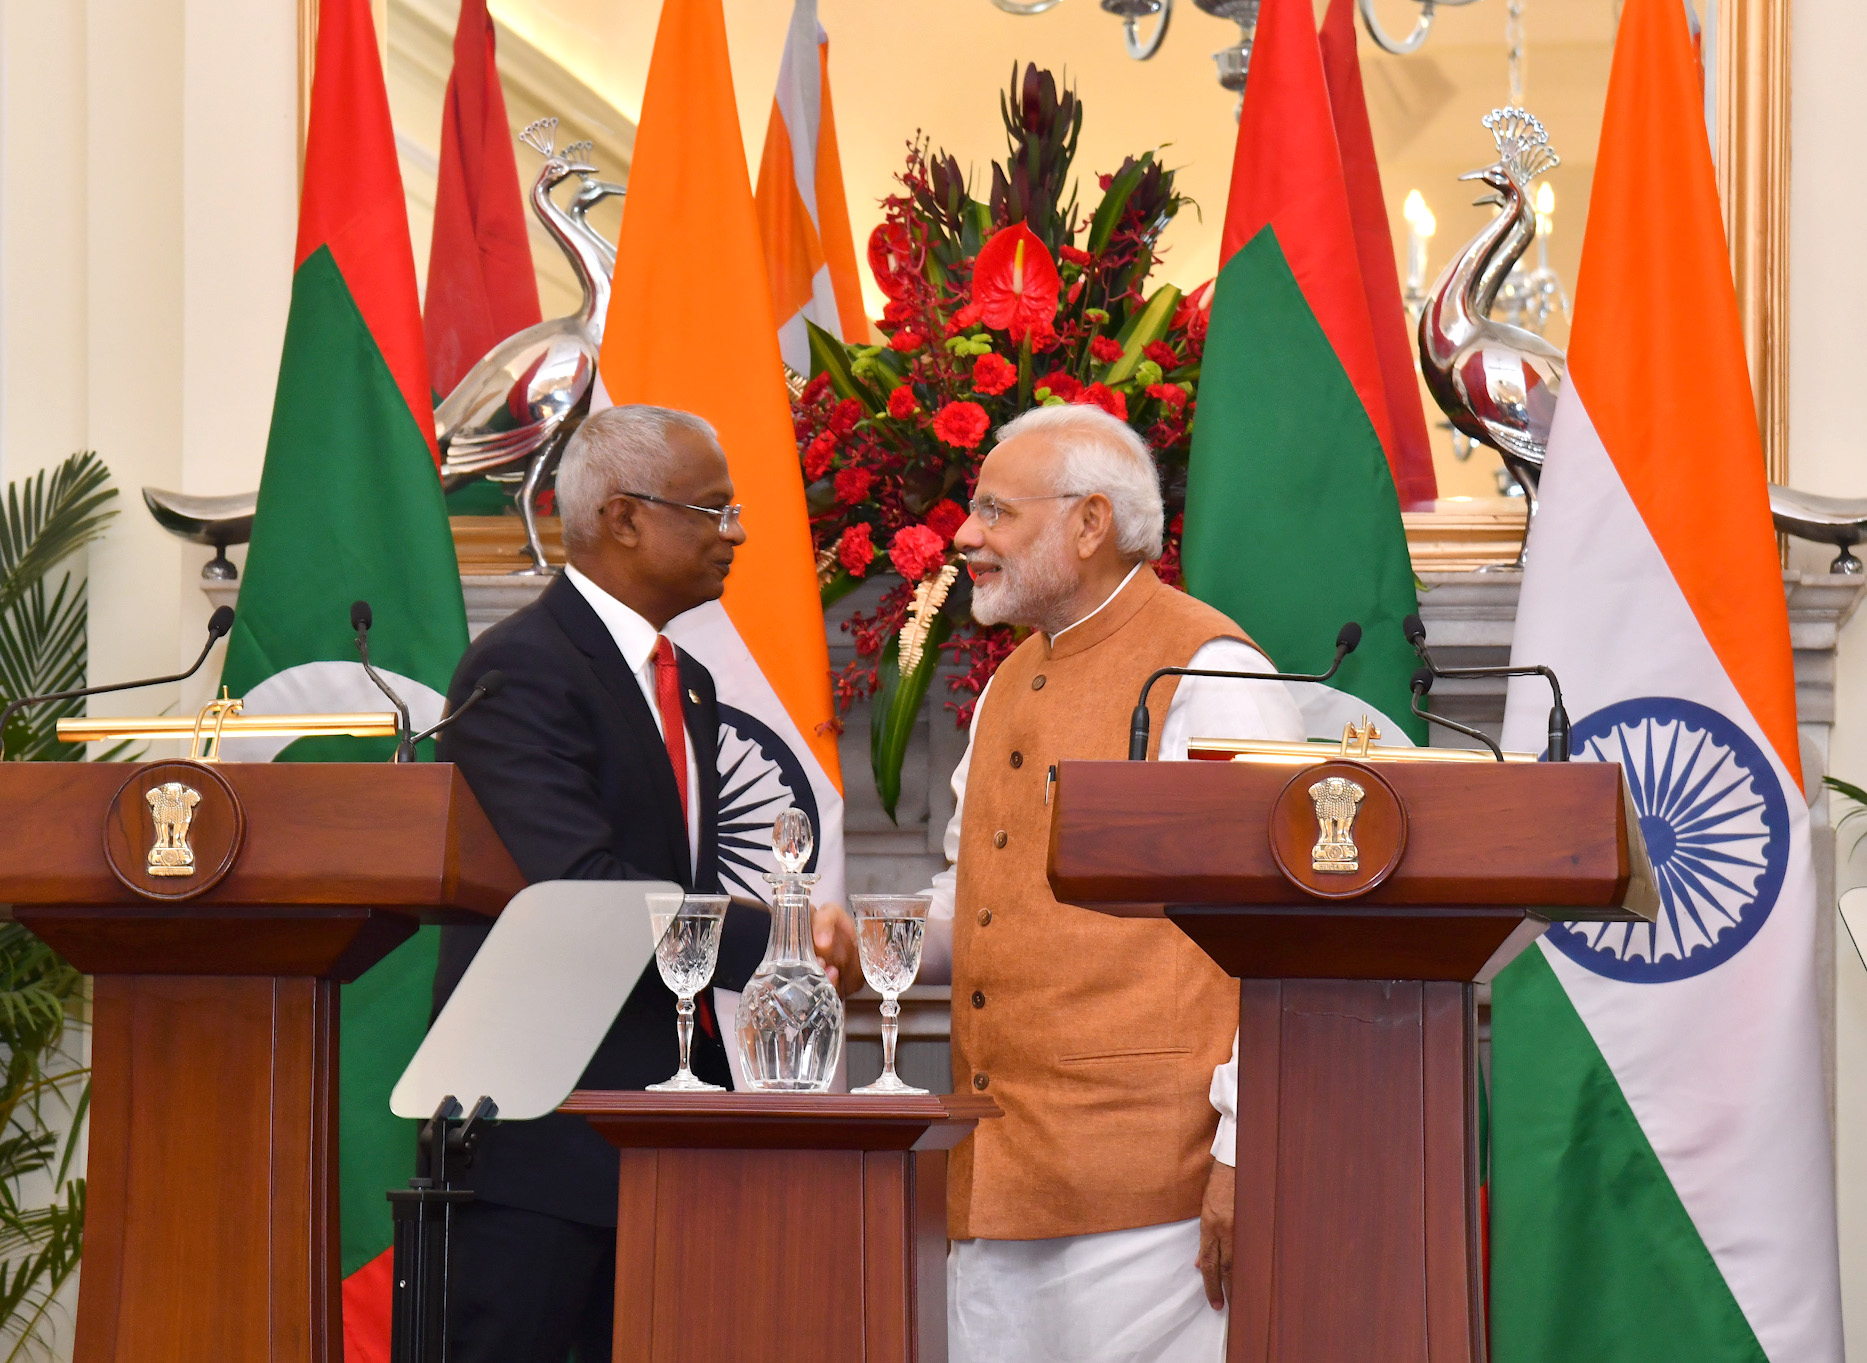 India extends USD 1.4 billion assistance to Maldives